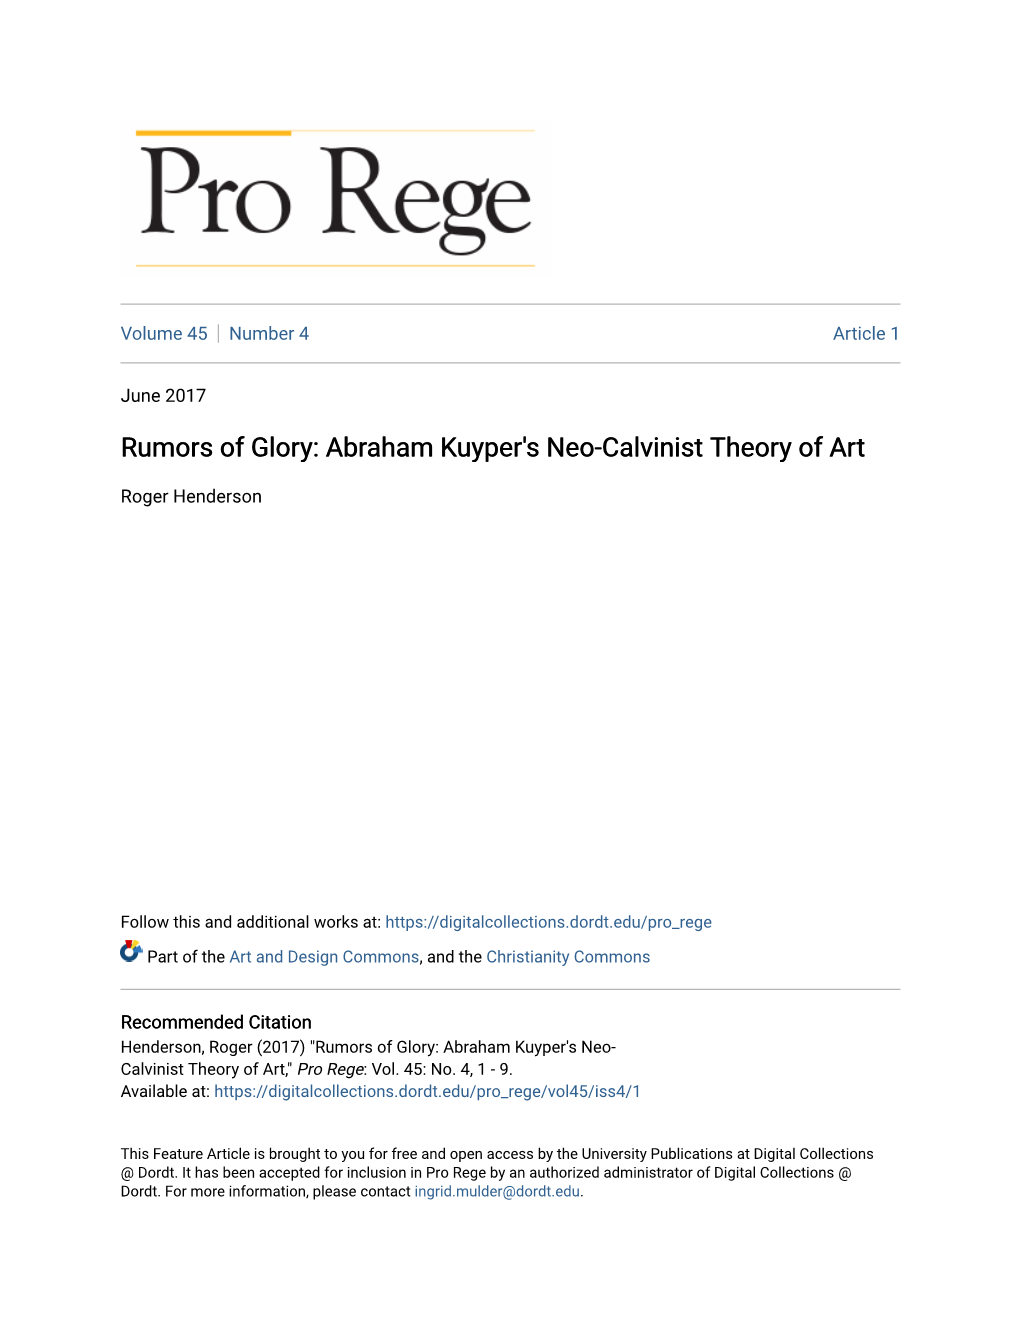 Abraham Kuyper's Neo-Calvinist Theory of Art